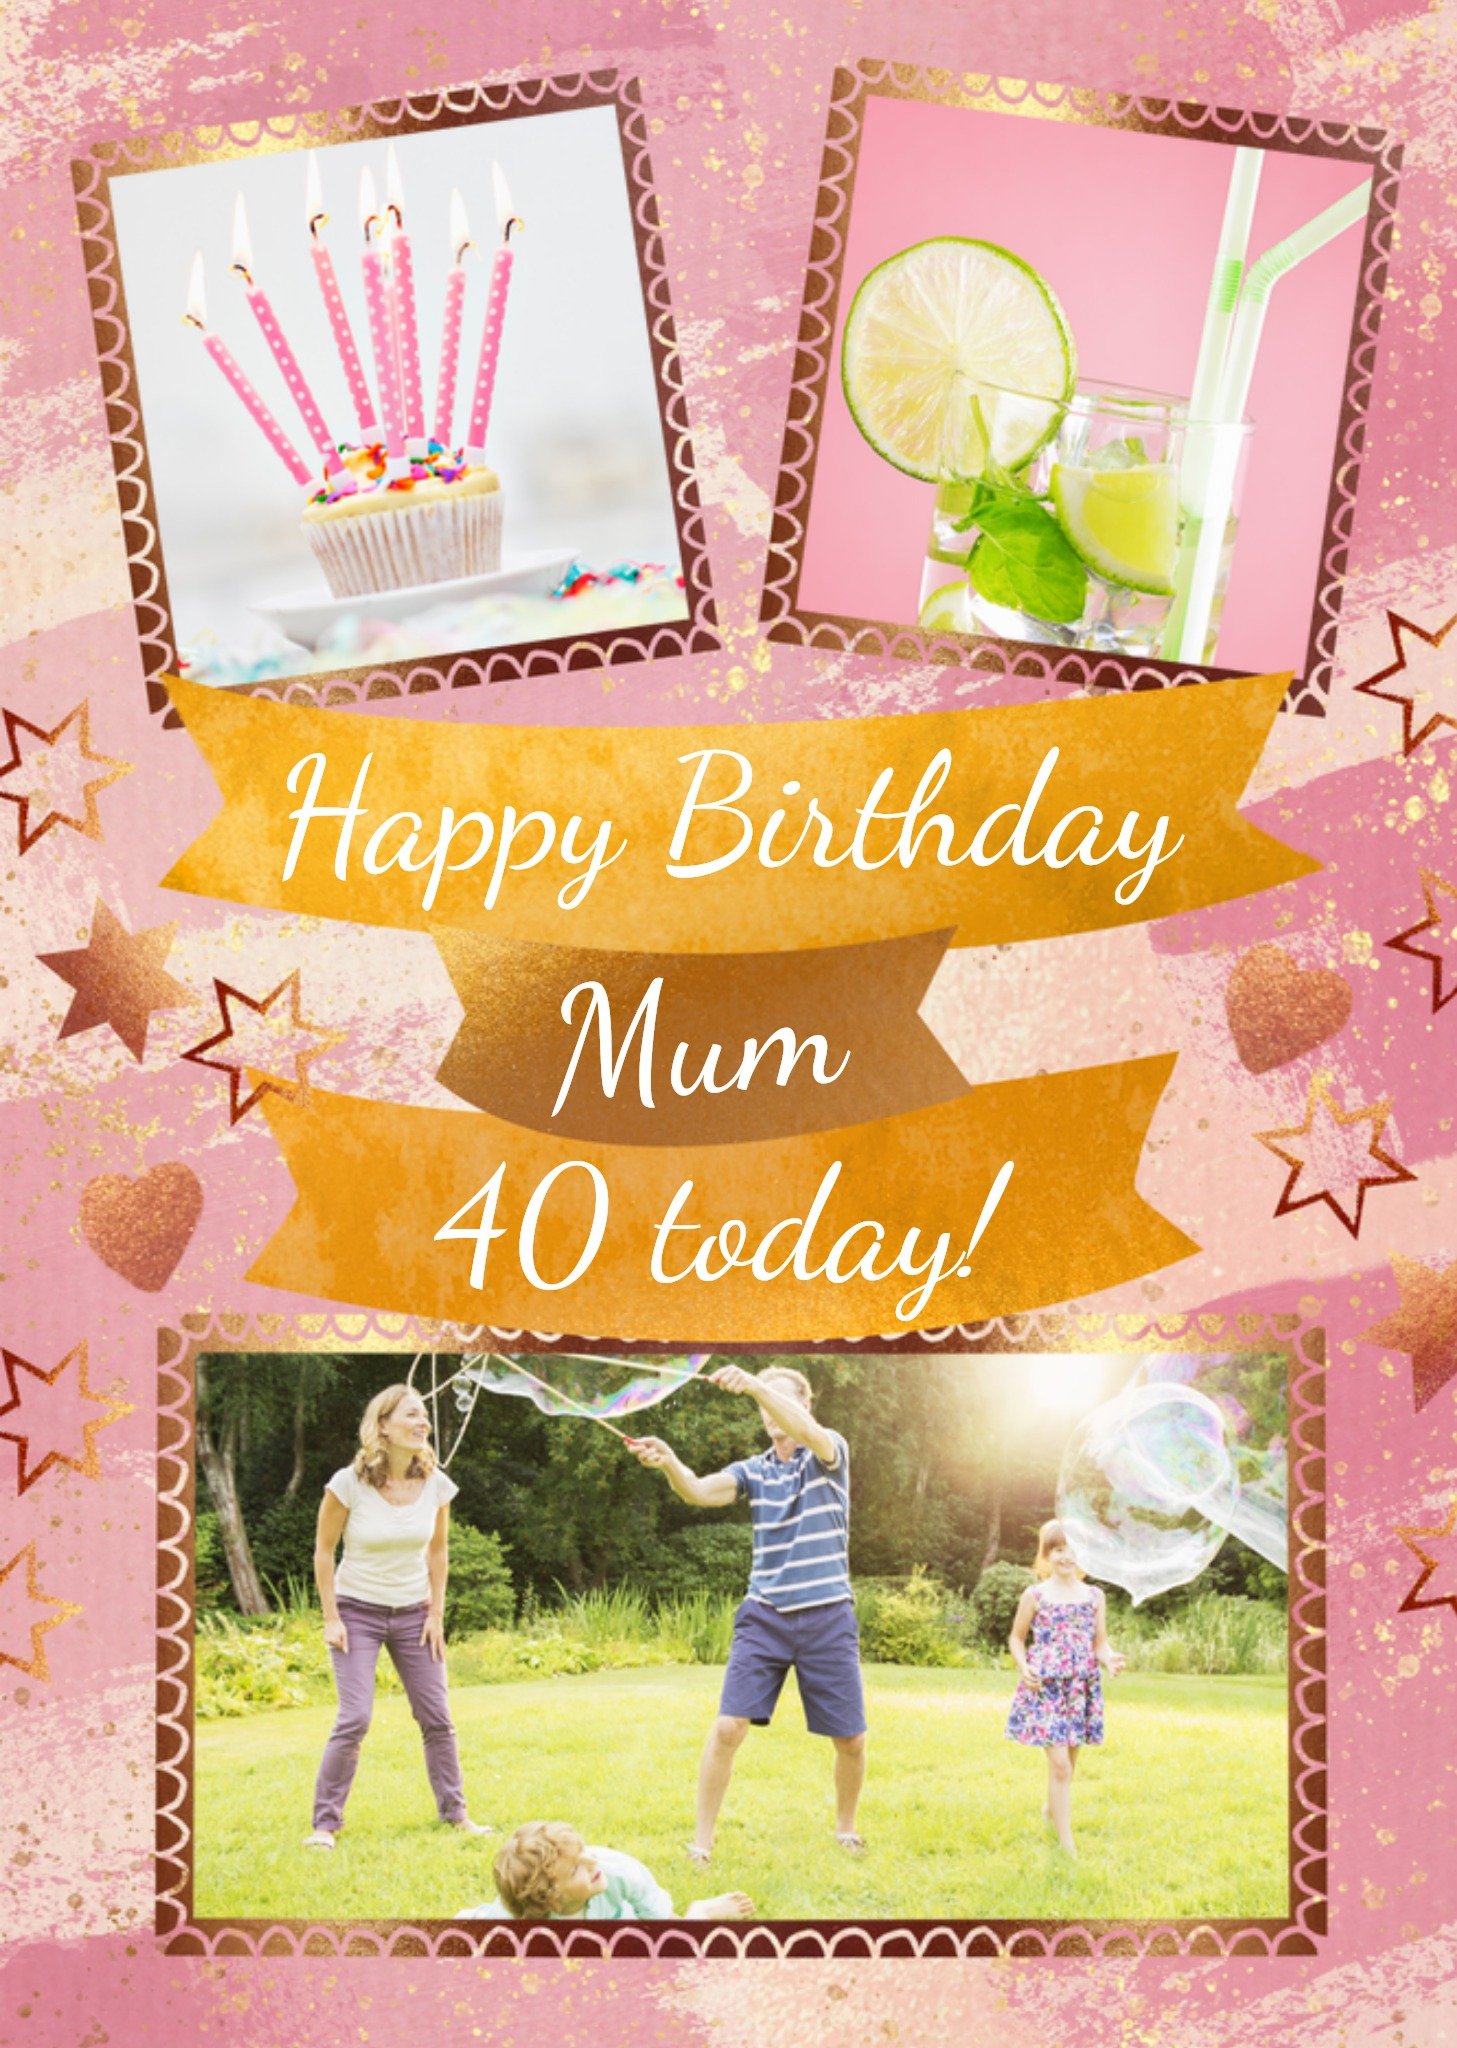 Moonpig Mum 40 Today Photo Upload Pink And Gold Birthday Card Ecard